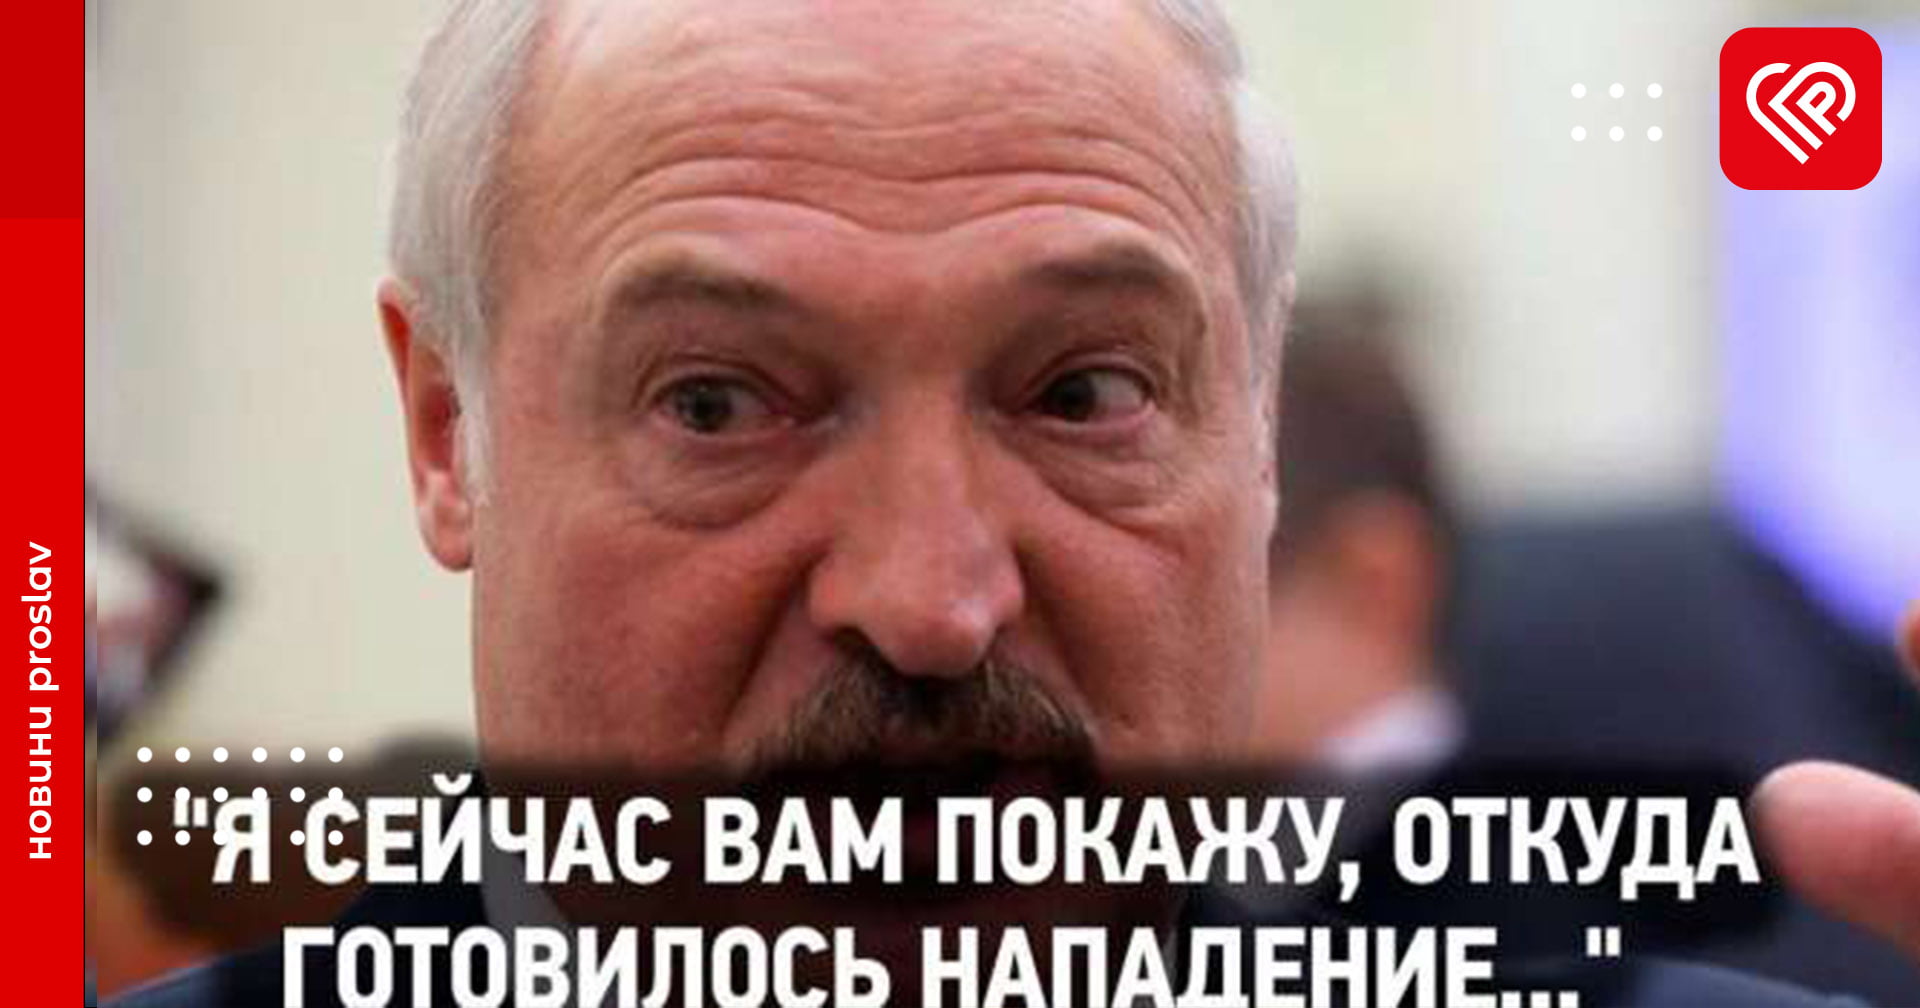 На беларусь готовилось нападение. Мем Лукашенко а я сейчас вам покажу. Лукашенко а я сейчас. Лукашенко Мем. А Я сейчас покажу мемы с Лукашенко.